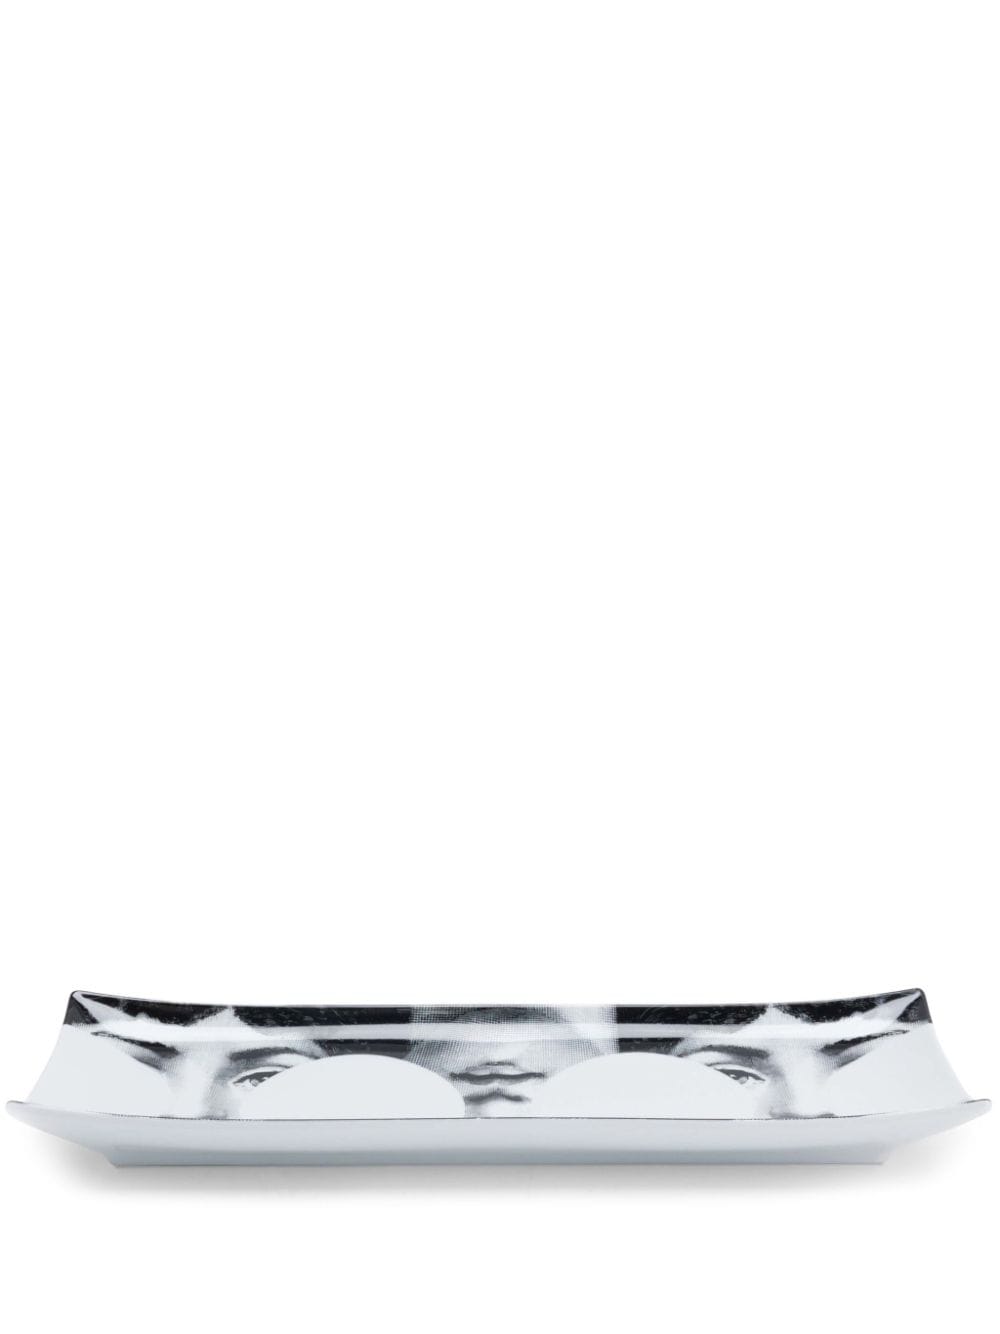 Fornasetti Tema e Variazioni n.242 porcelain ashtray - White von Fornasetti